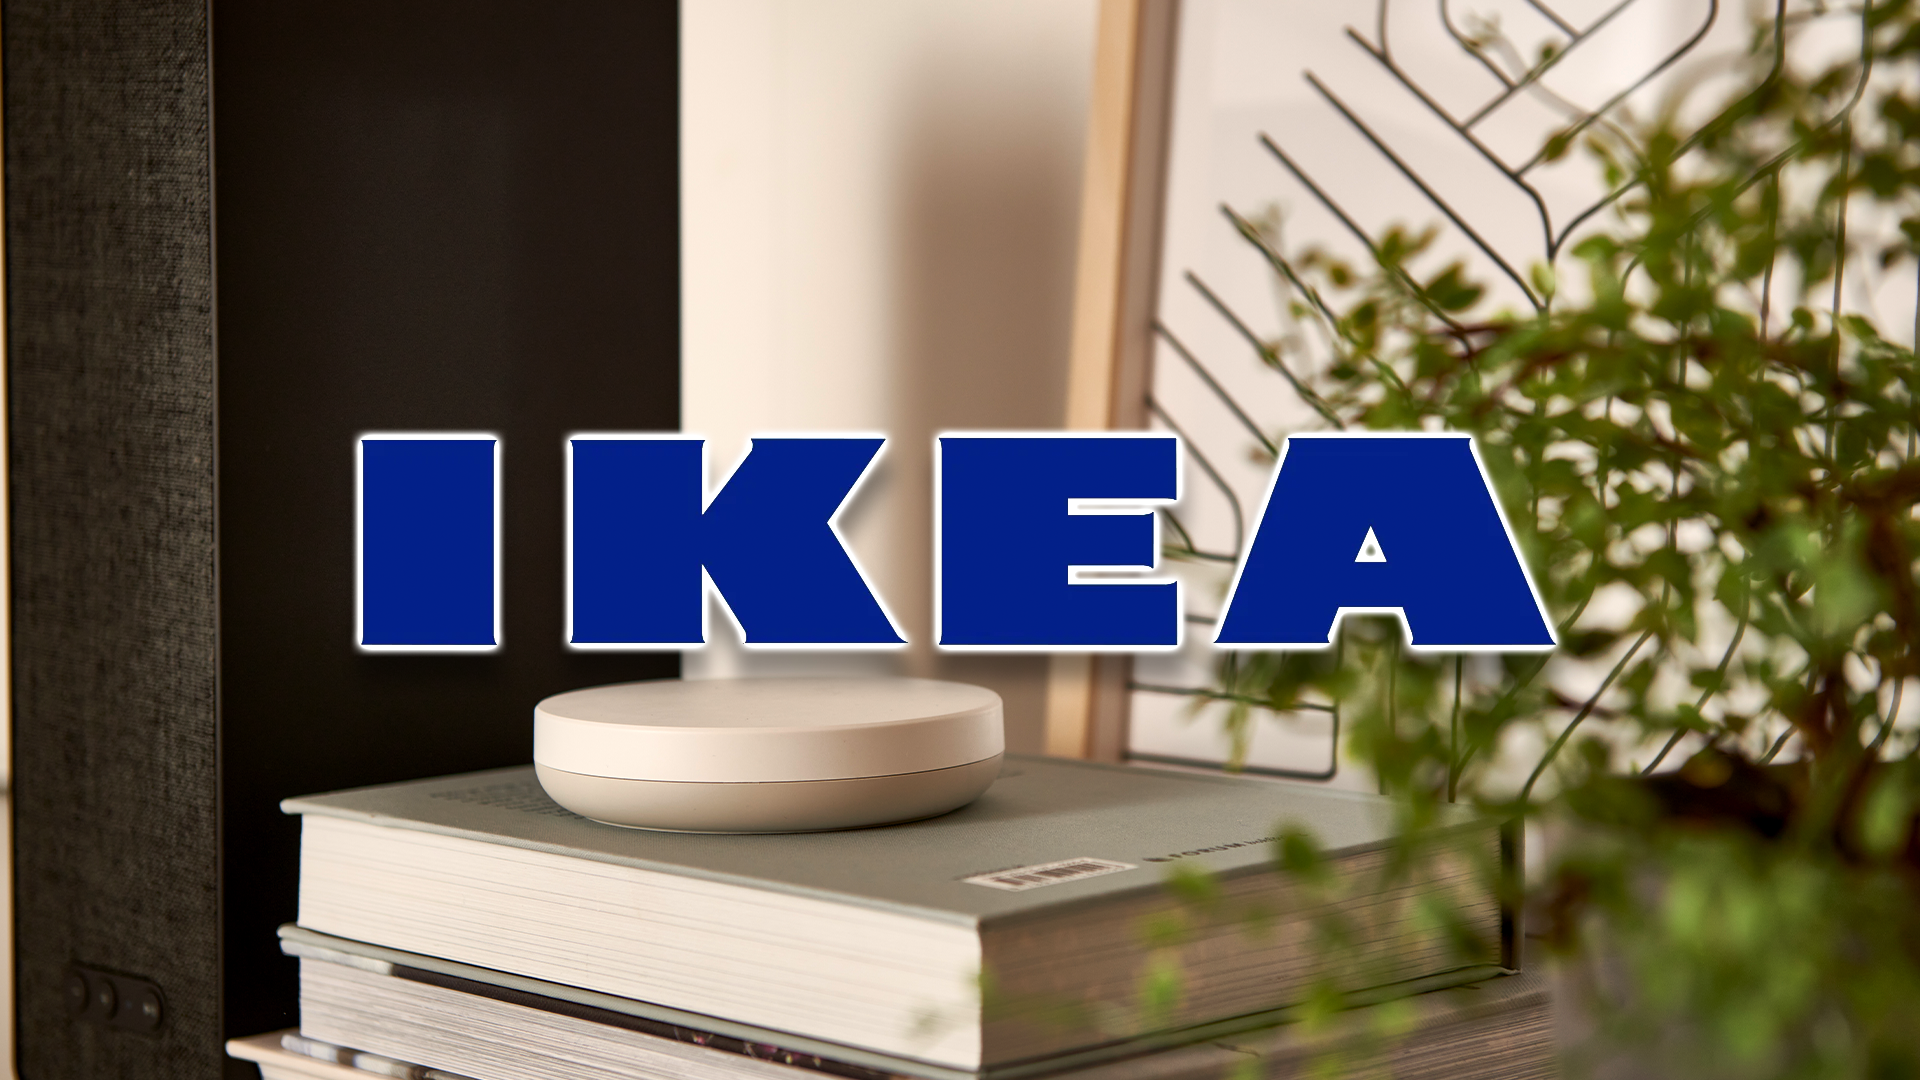 The IKEA logo over the DIRIGERA smart home hub.